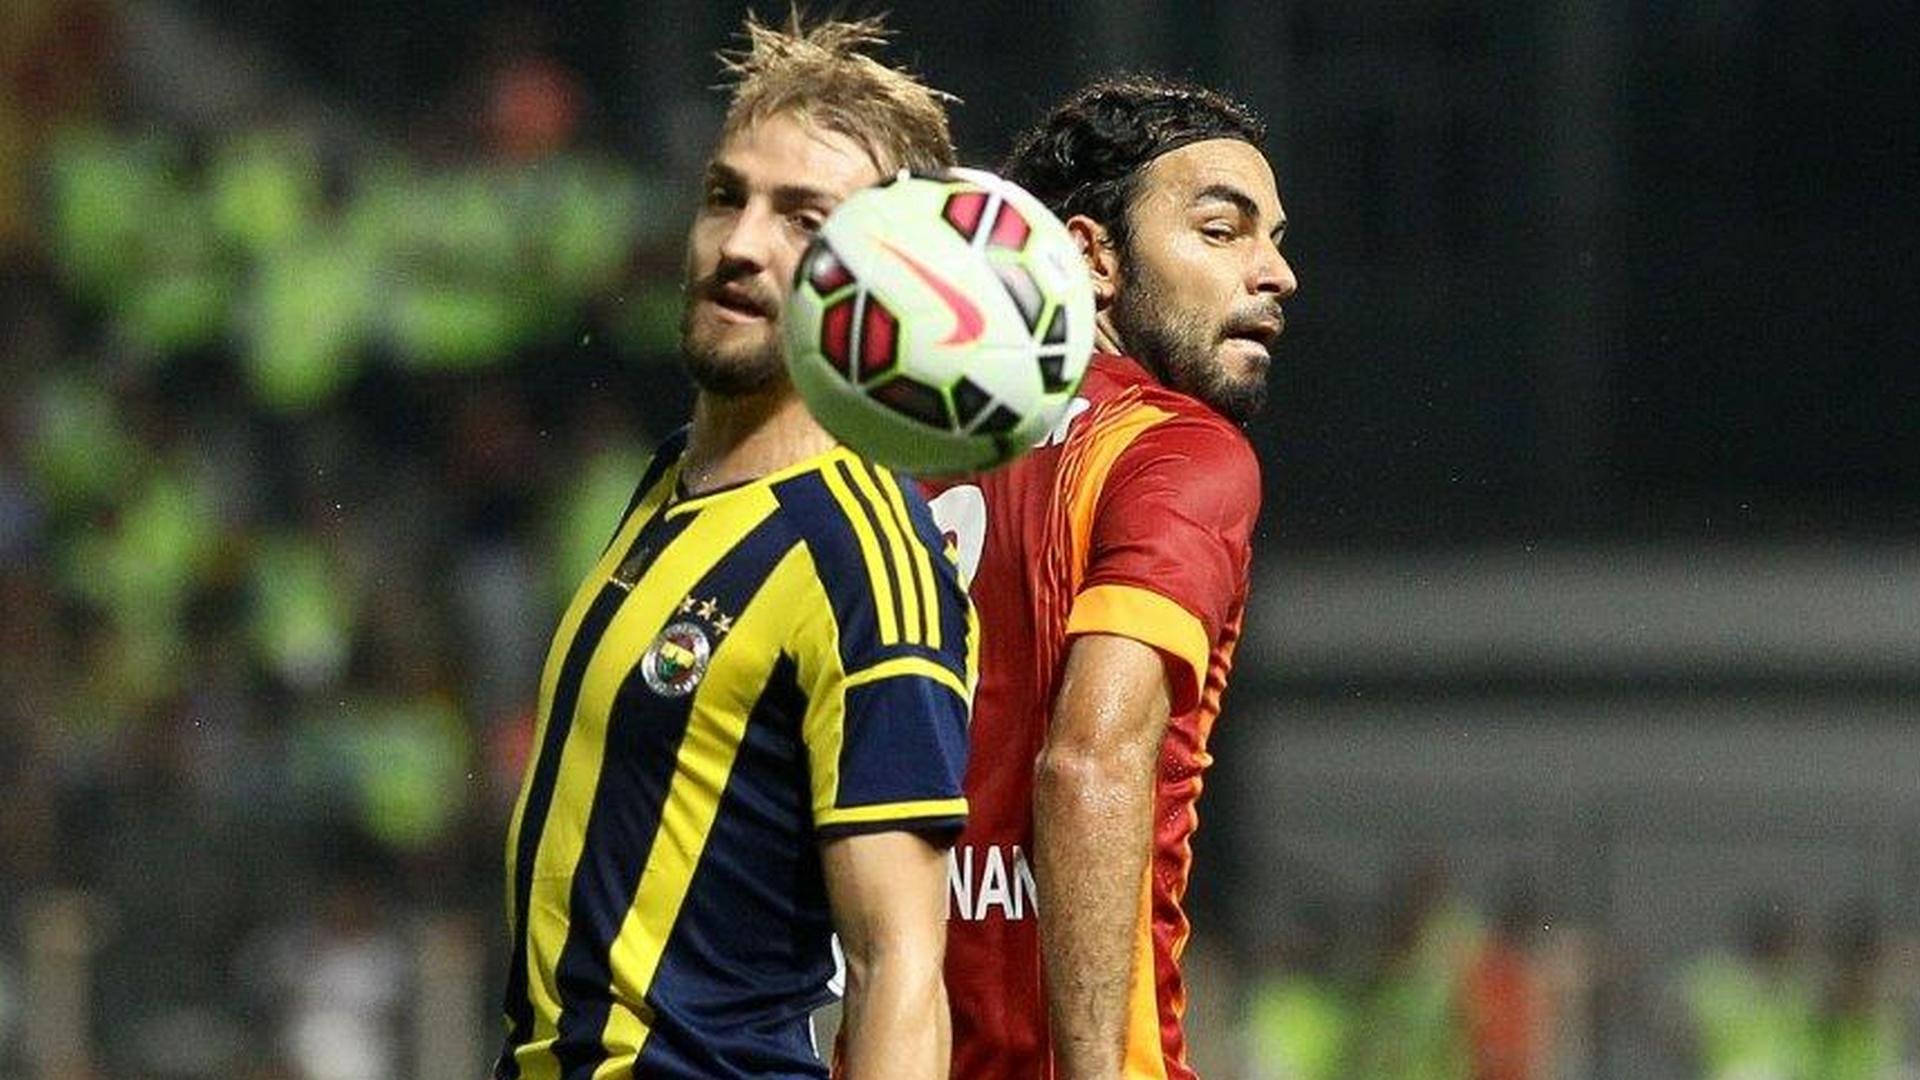 Önce Fenerbahçe sonra Galatasaray'da oynayan oyuncular